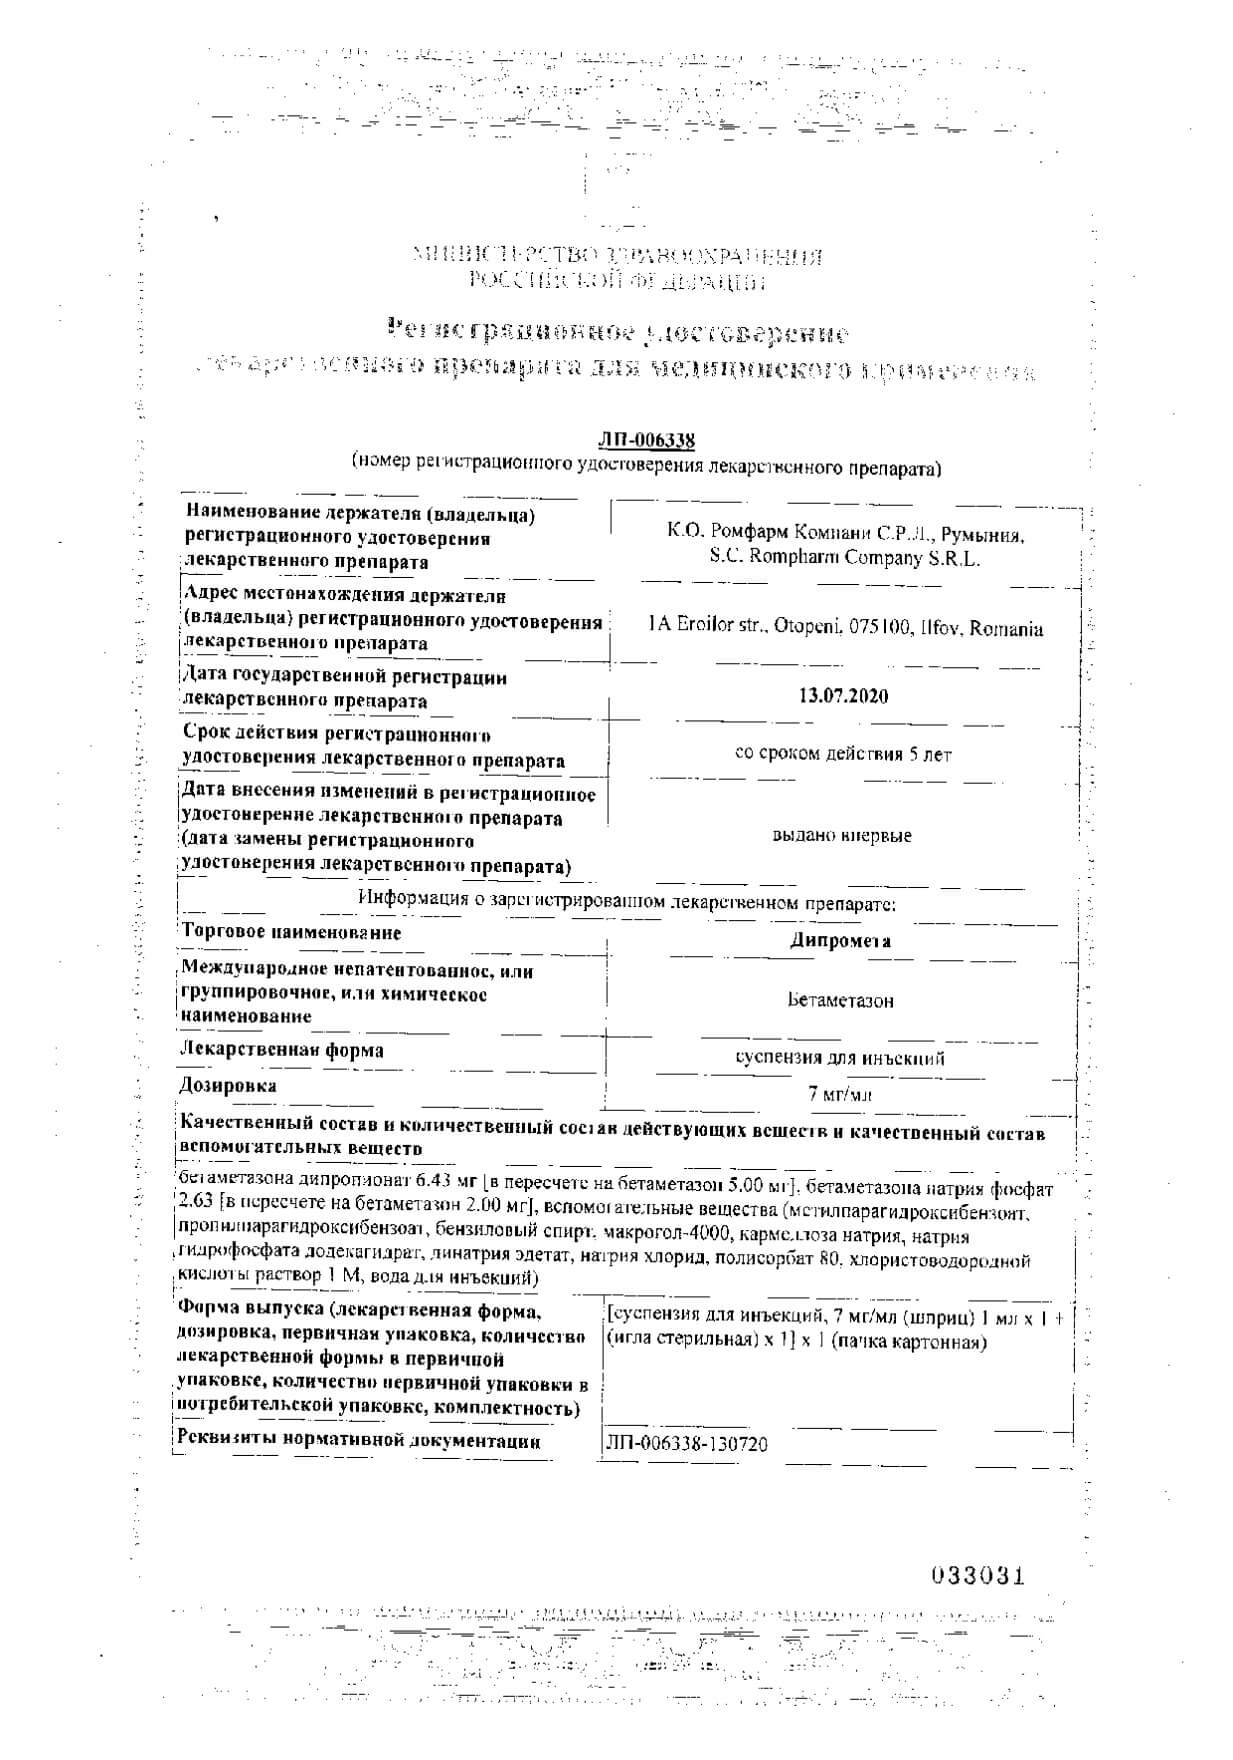 Дипромета сусп. д/ин. 7мг/мл шприц 1мл №1+игла стерильная №1: сертификат